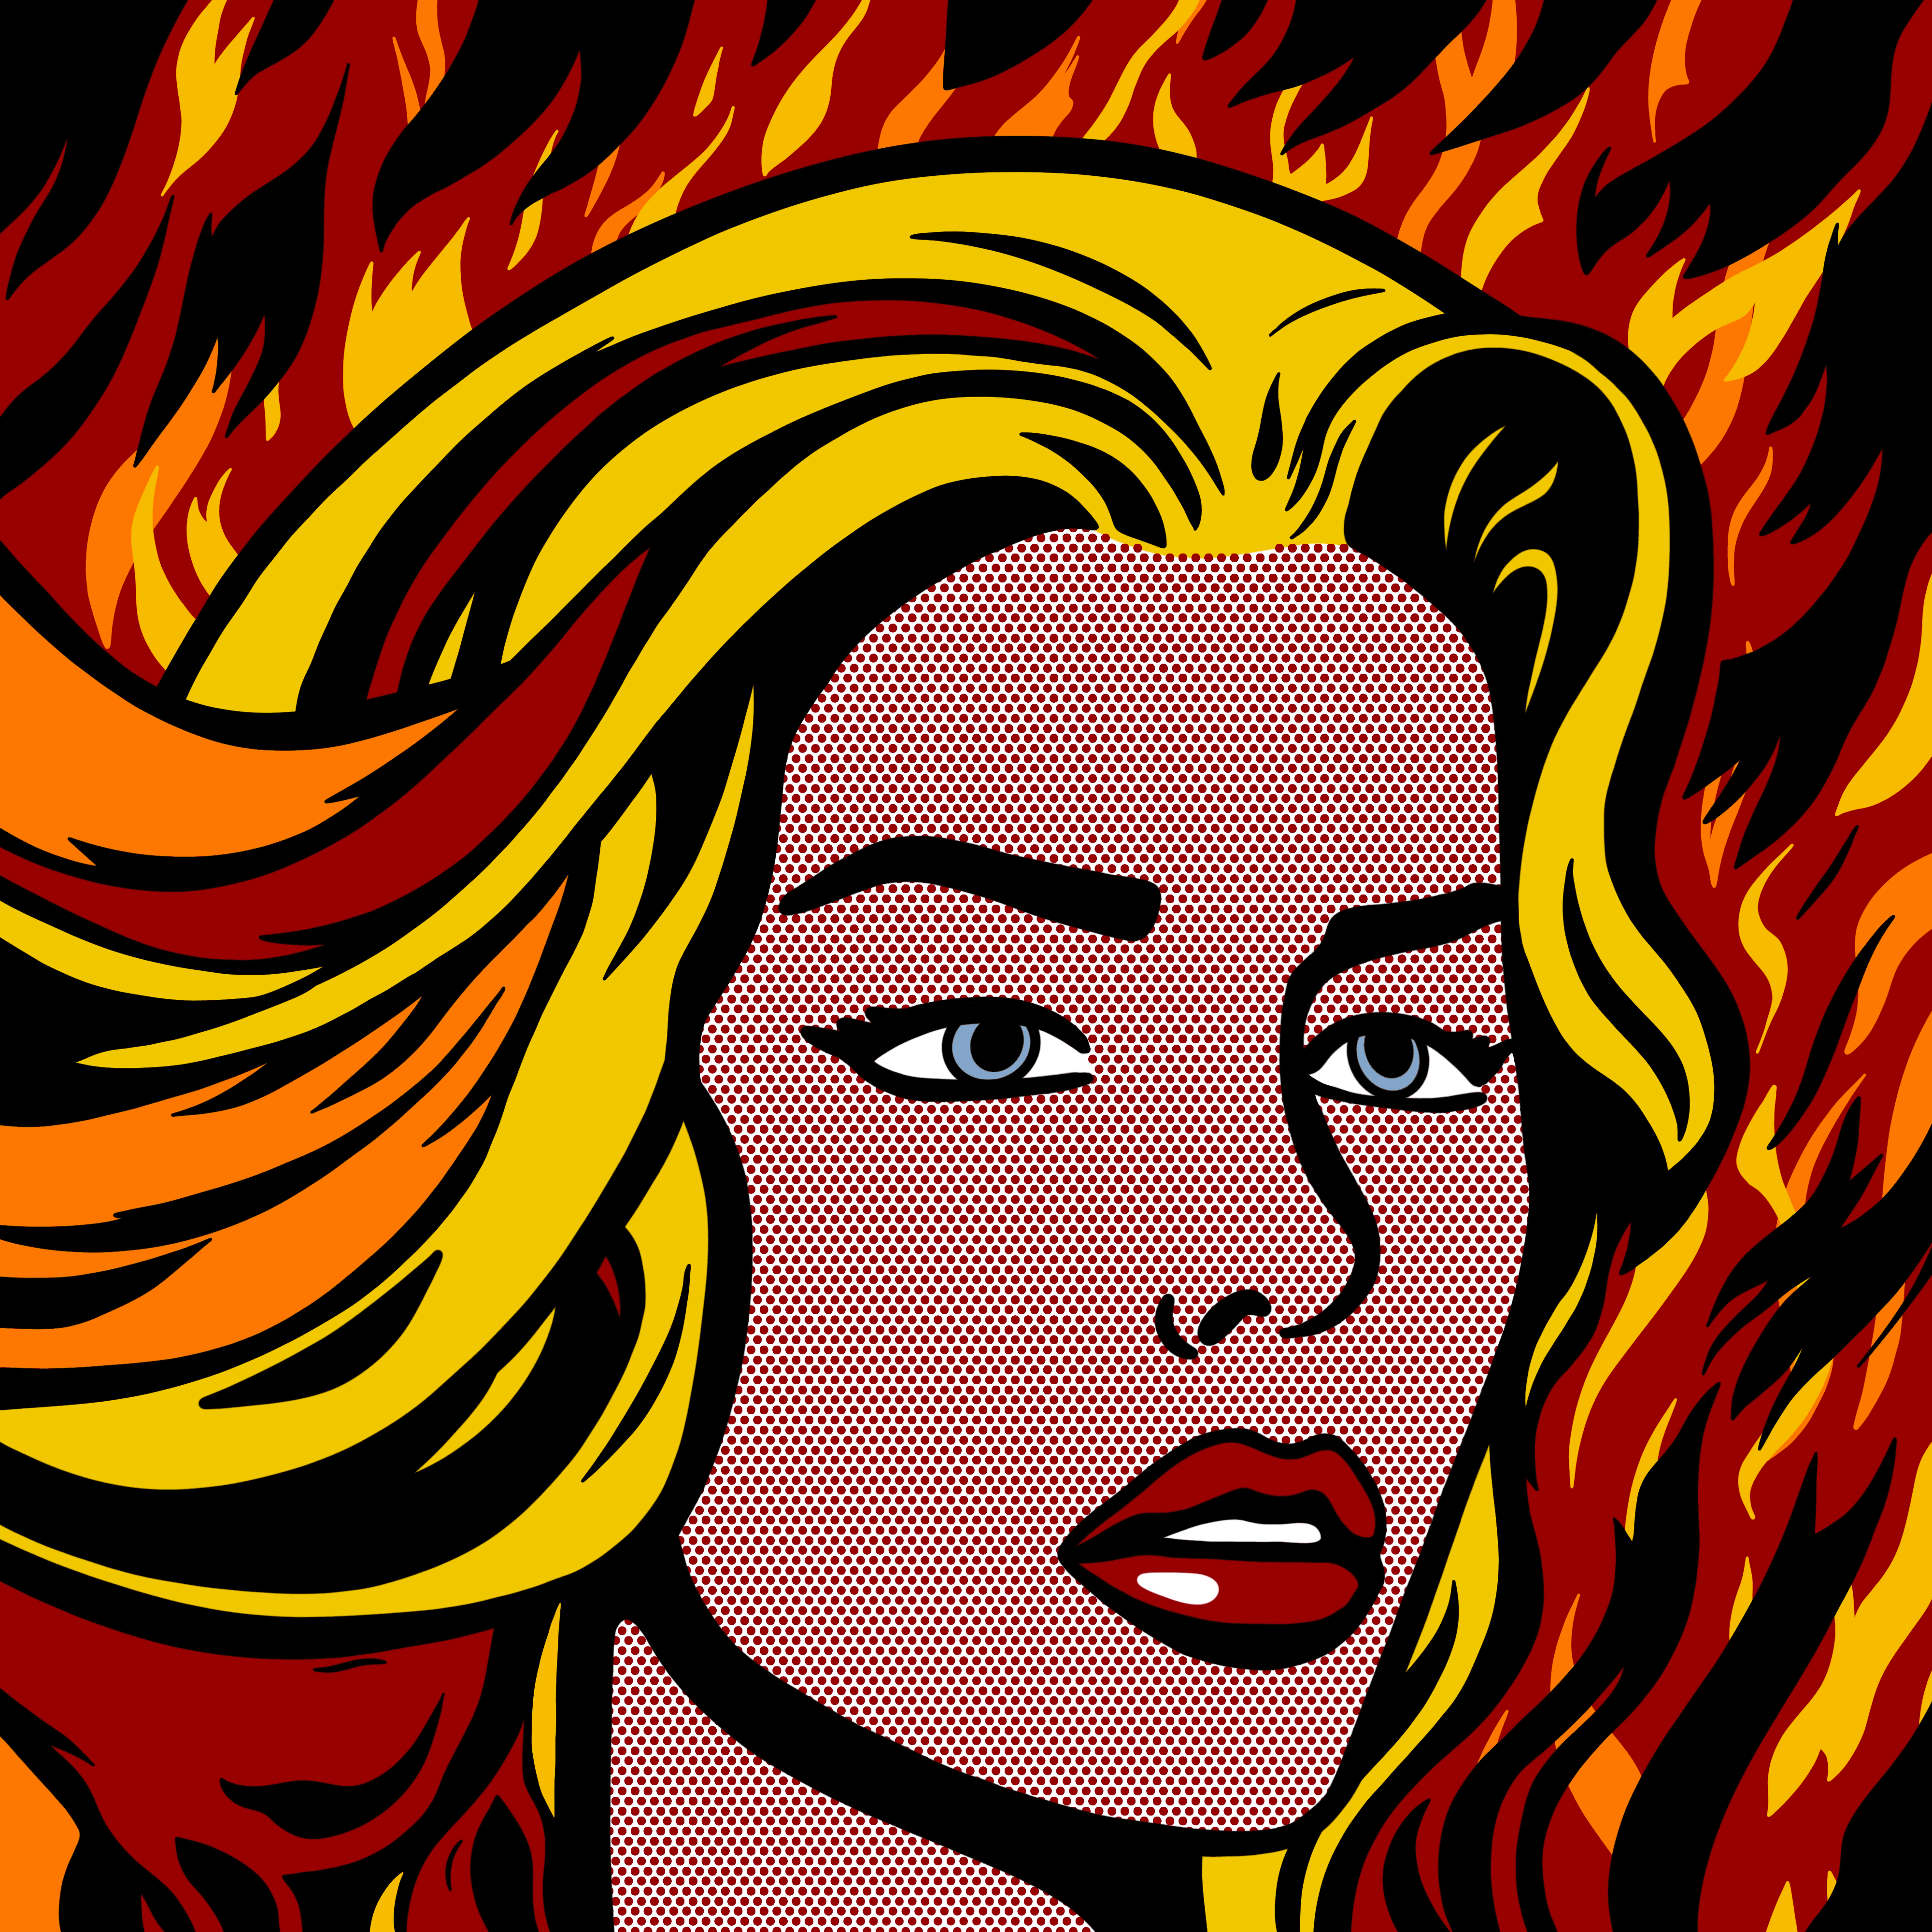 girl on fire